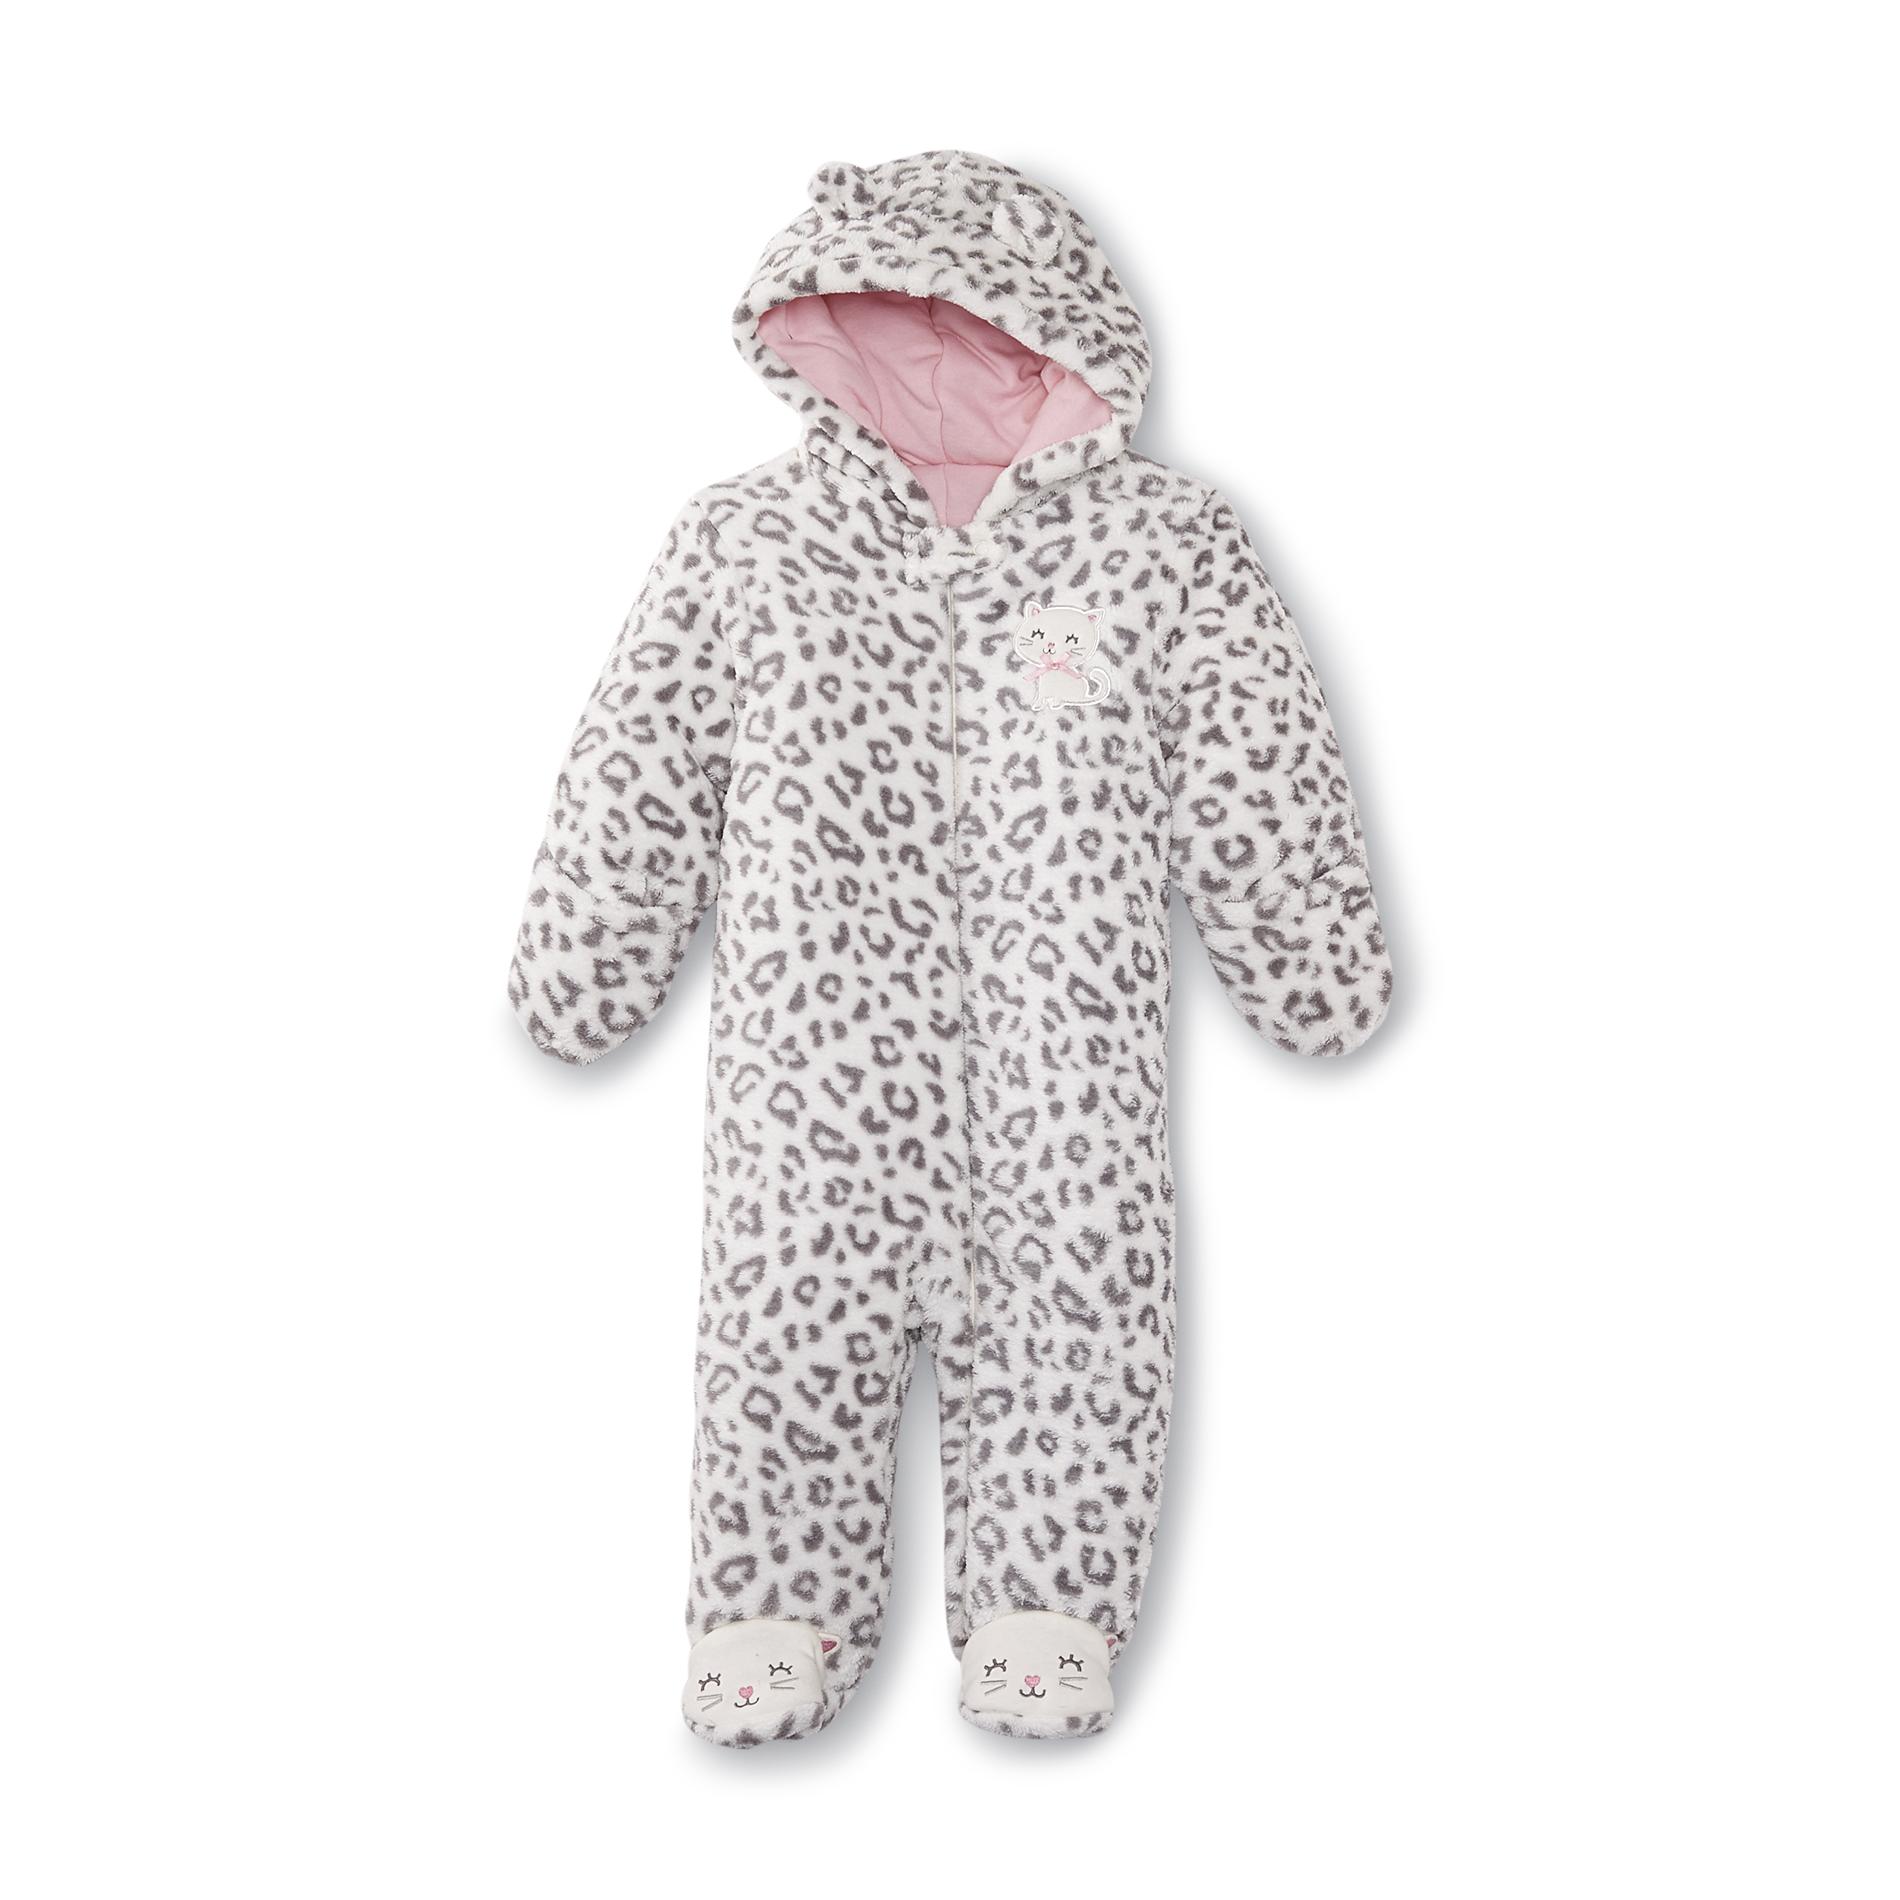 Little Wonders Newborn Girl's Pram Suit - Leopard